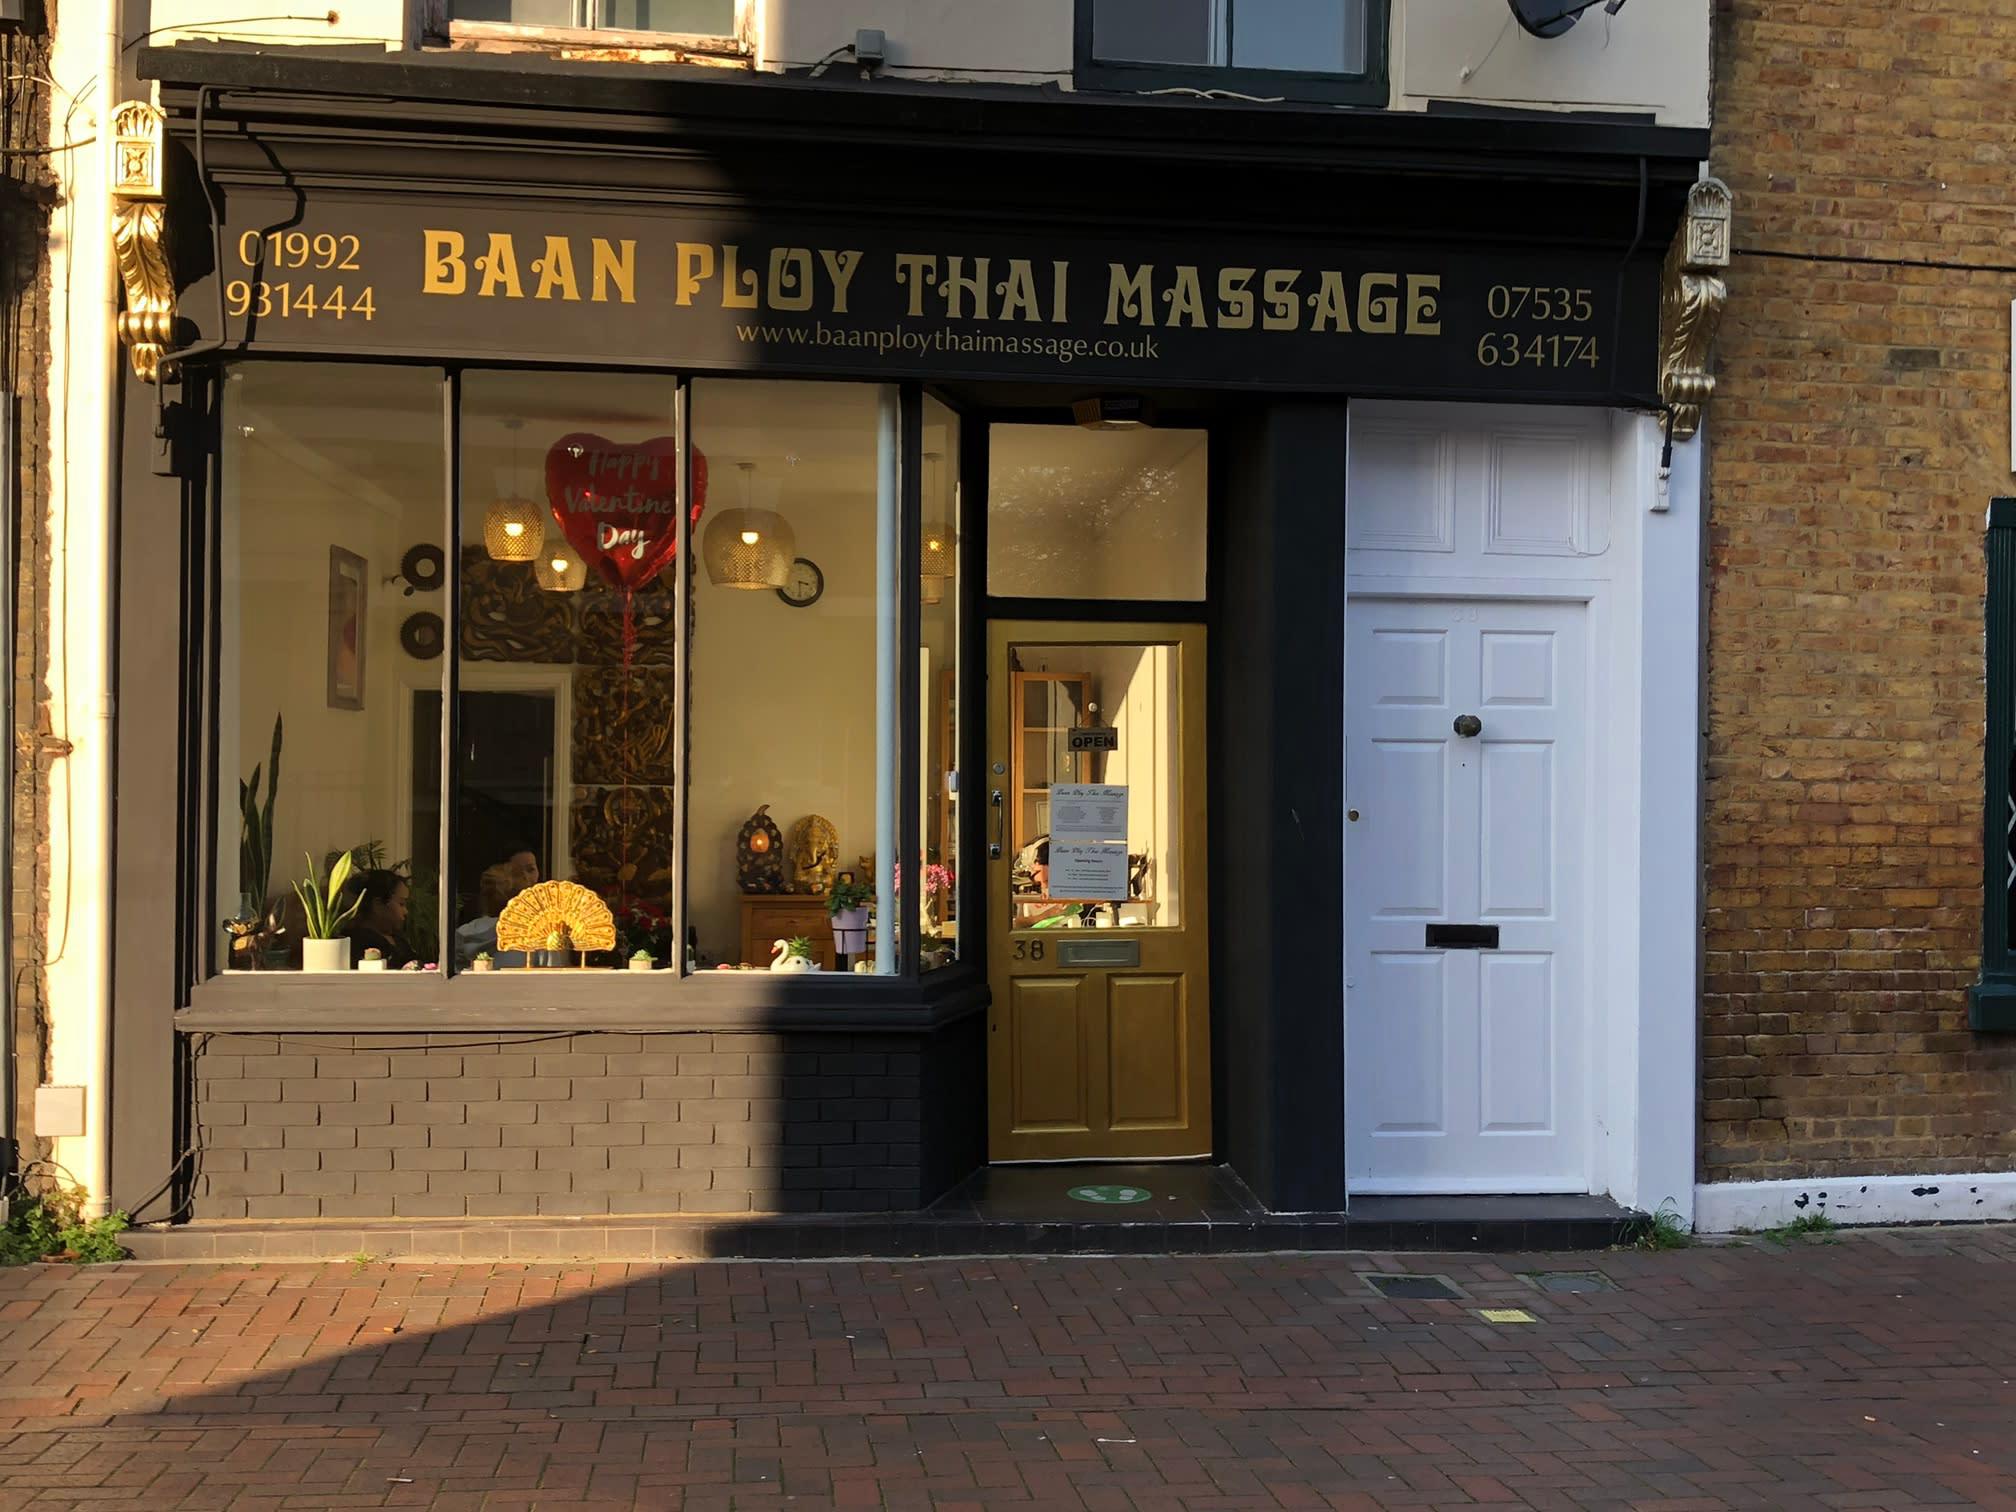 Images Baan Ploy Thai Massage Ltd